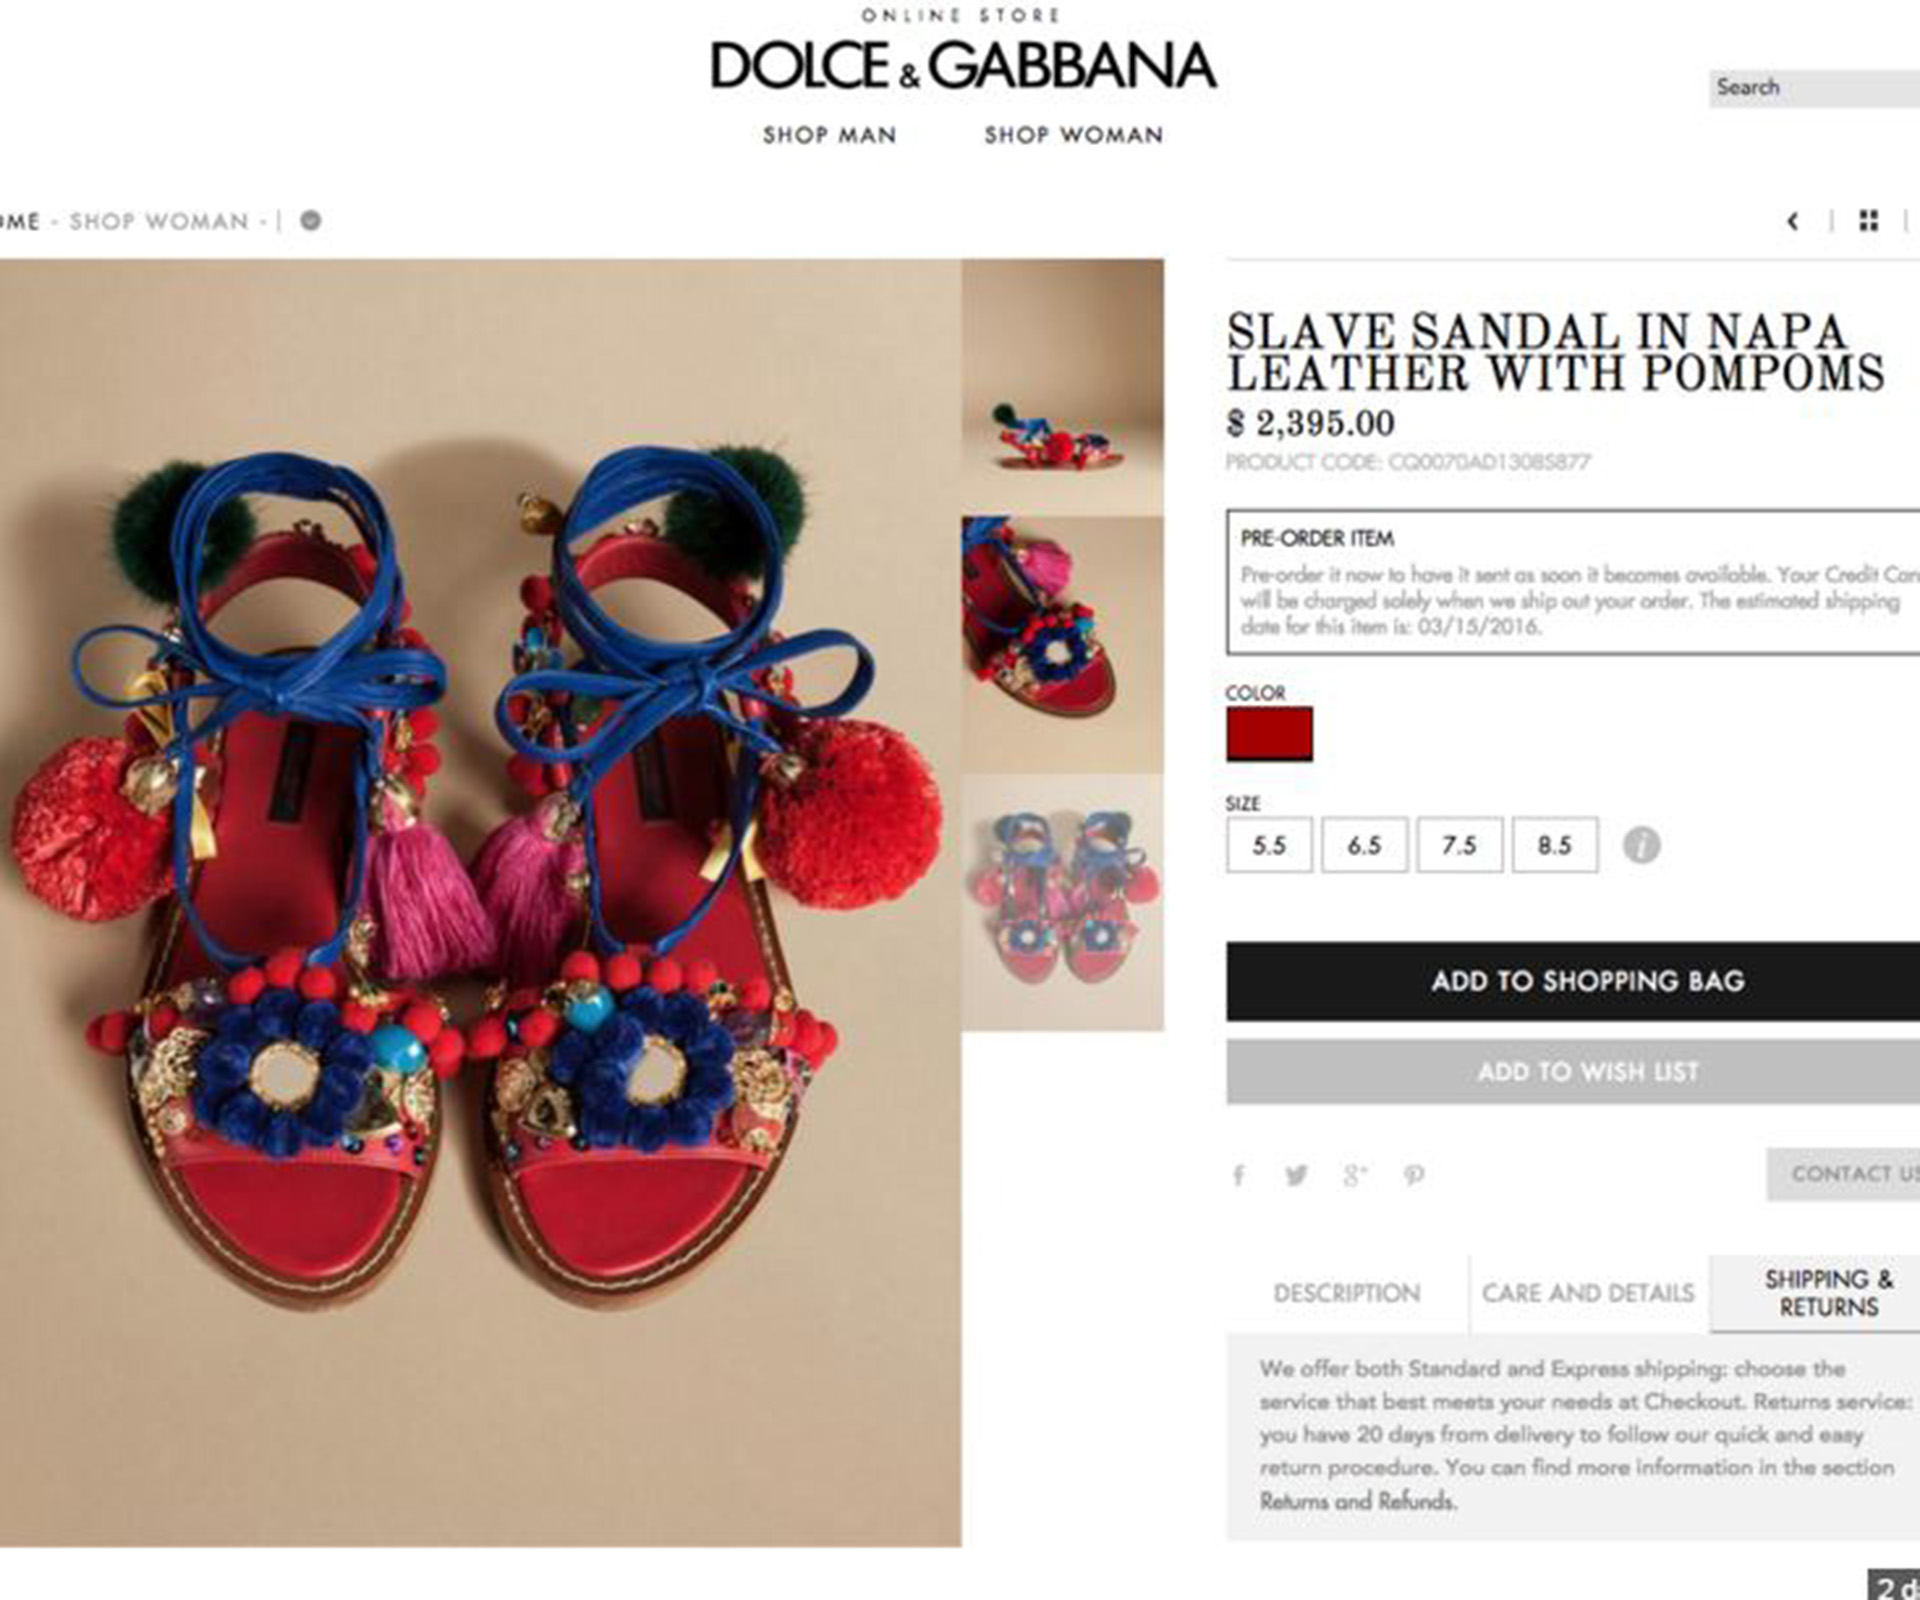 D&G blasted for selling “slave” sandals